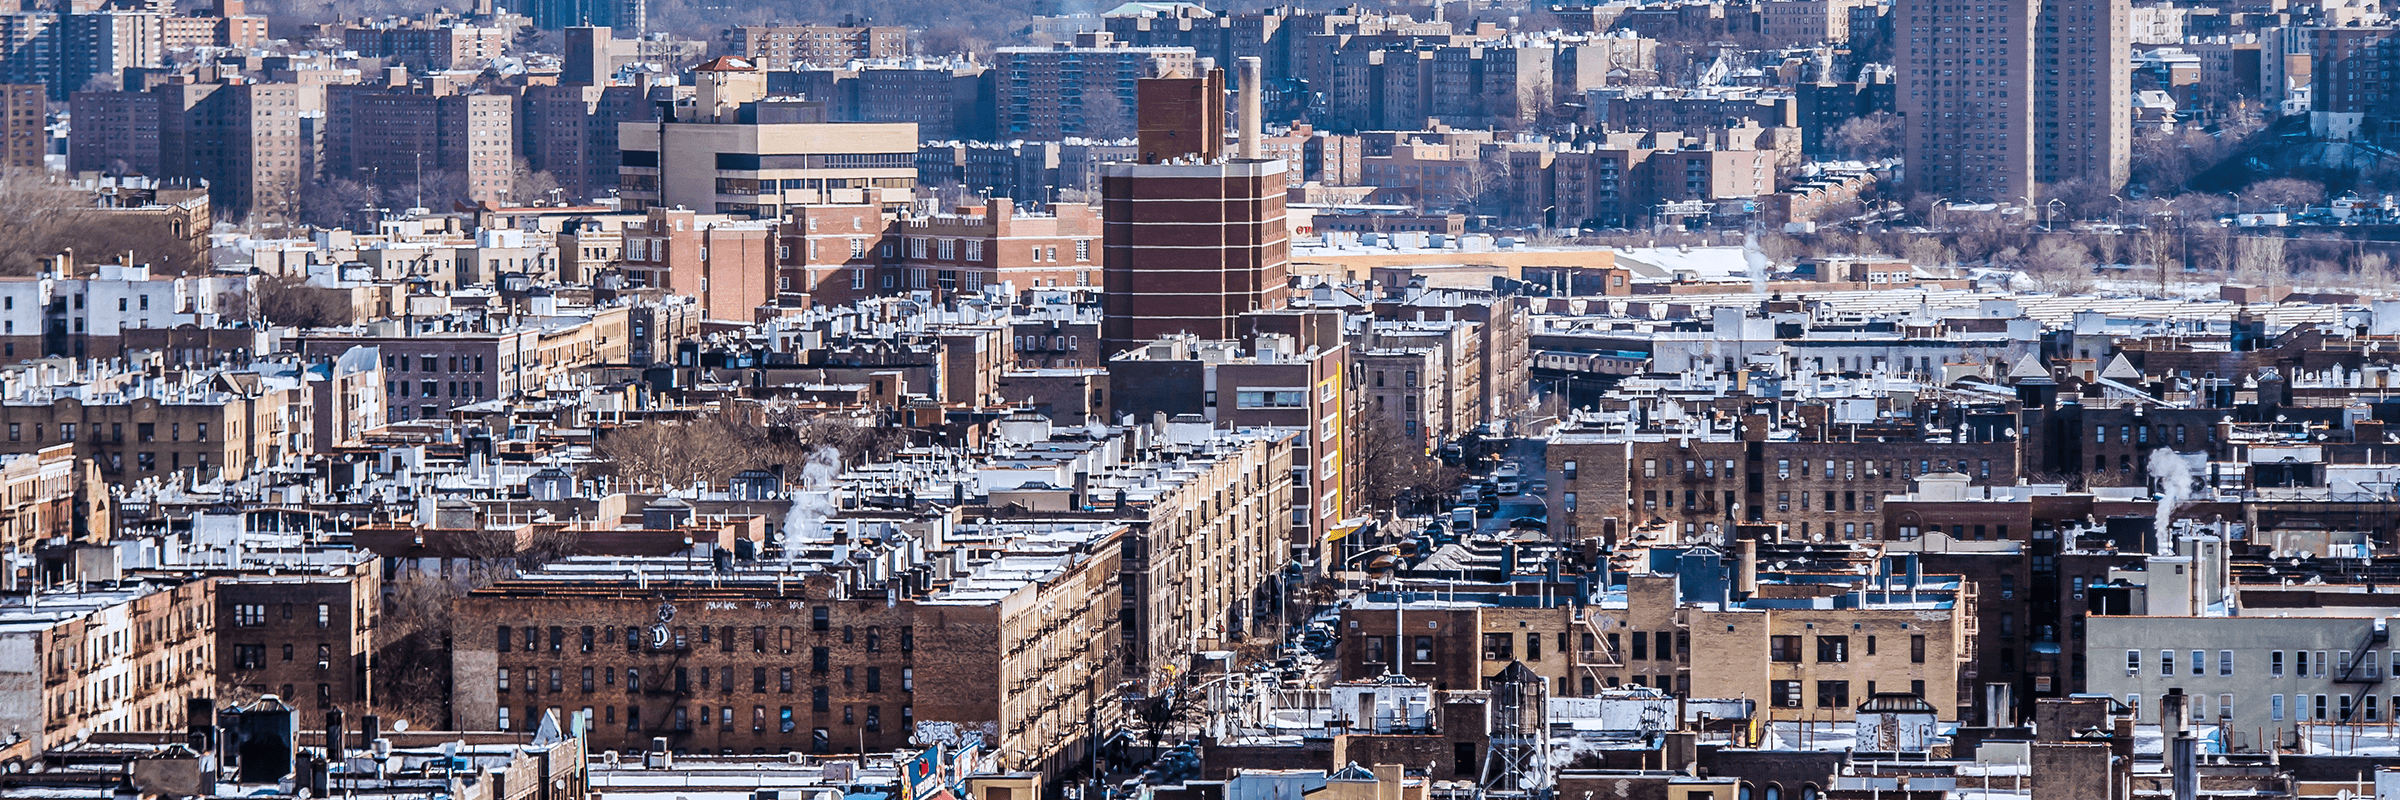 image of dense buildings in new york city